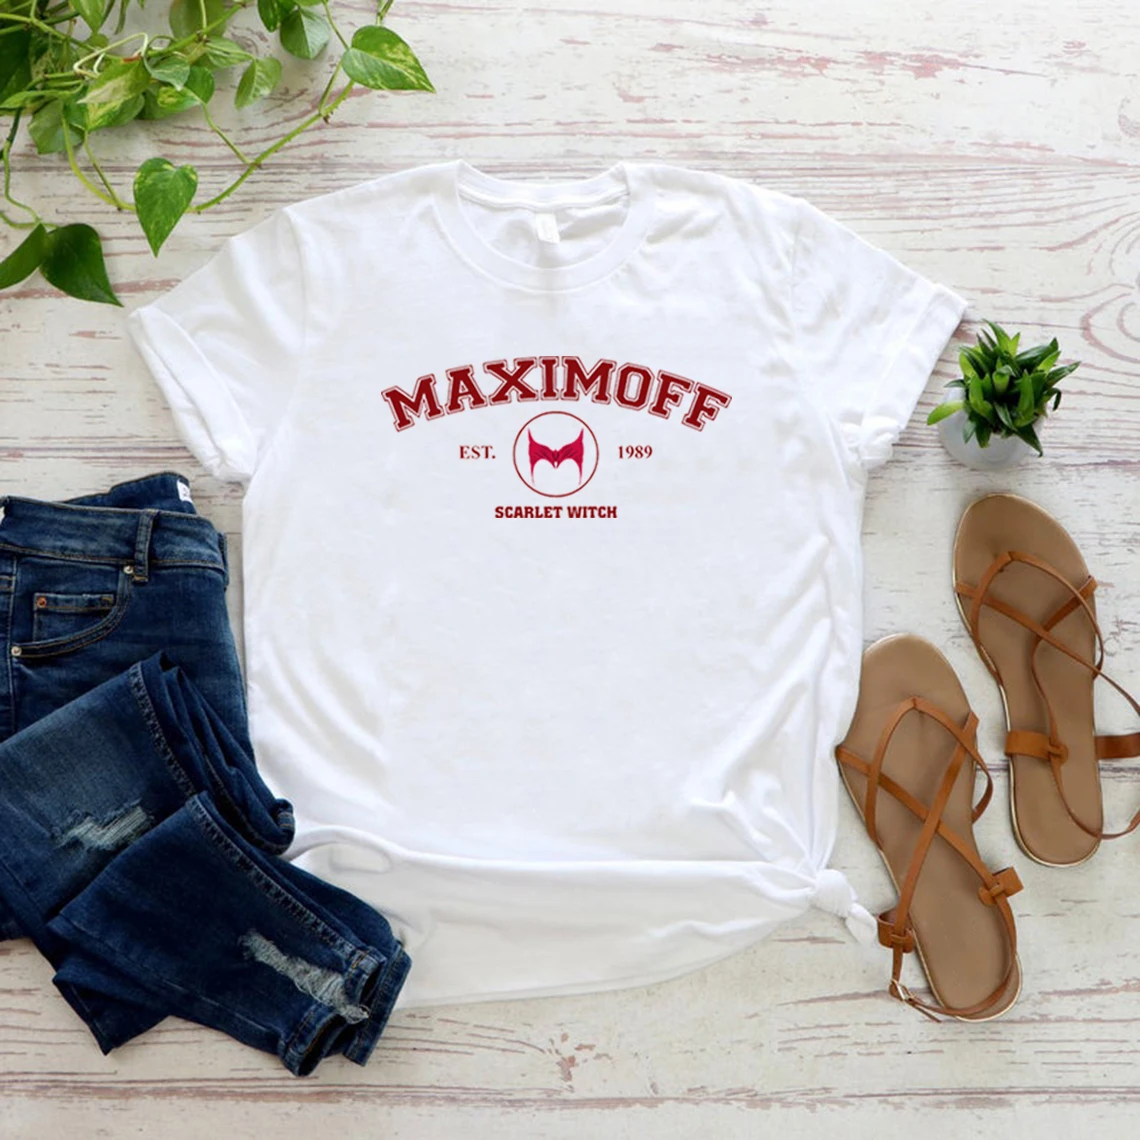 Maximoff 1989 T Shirt Vintage Scarlet Witch T-shirt Wanda Maximoff Shirts Women Graphic Tee Tops Short Sleeve Casual Tshirt